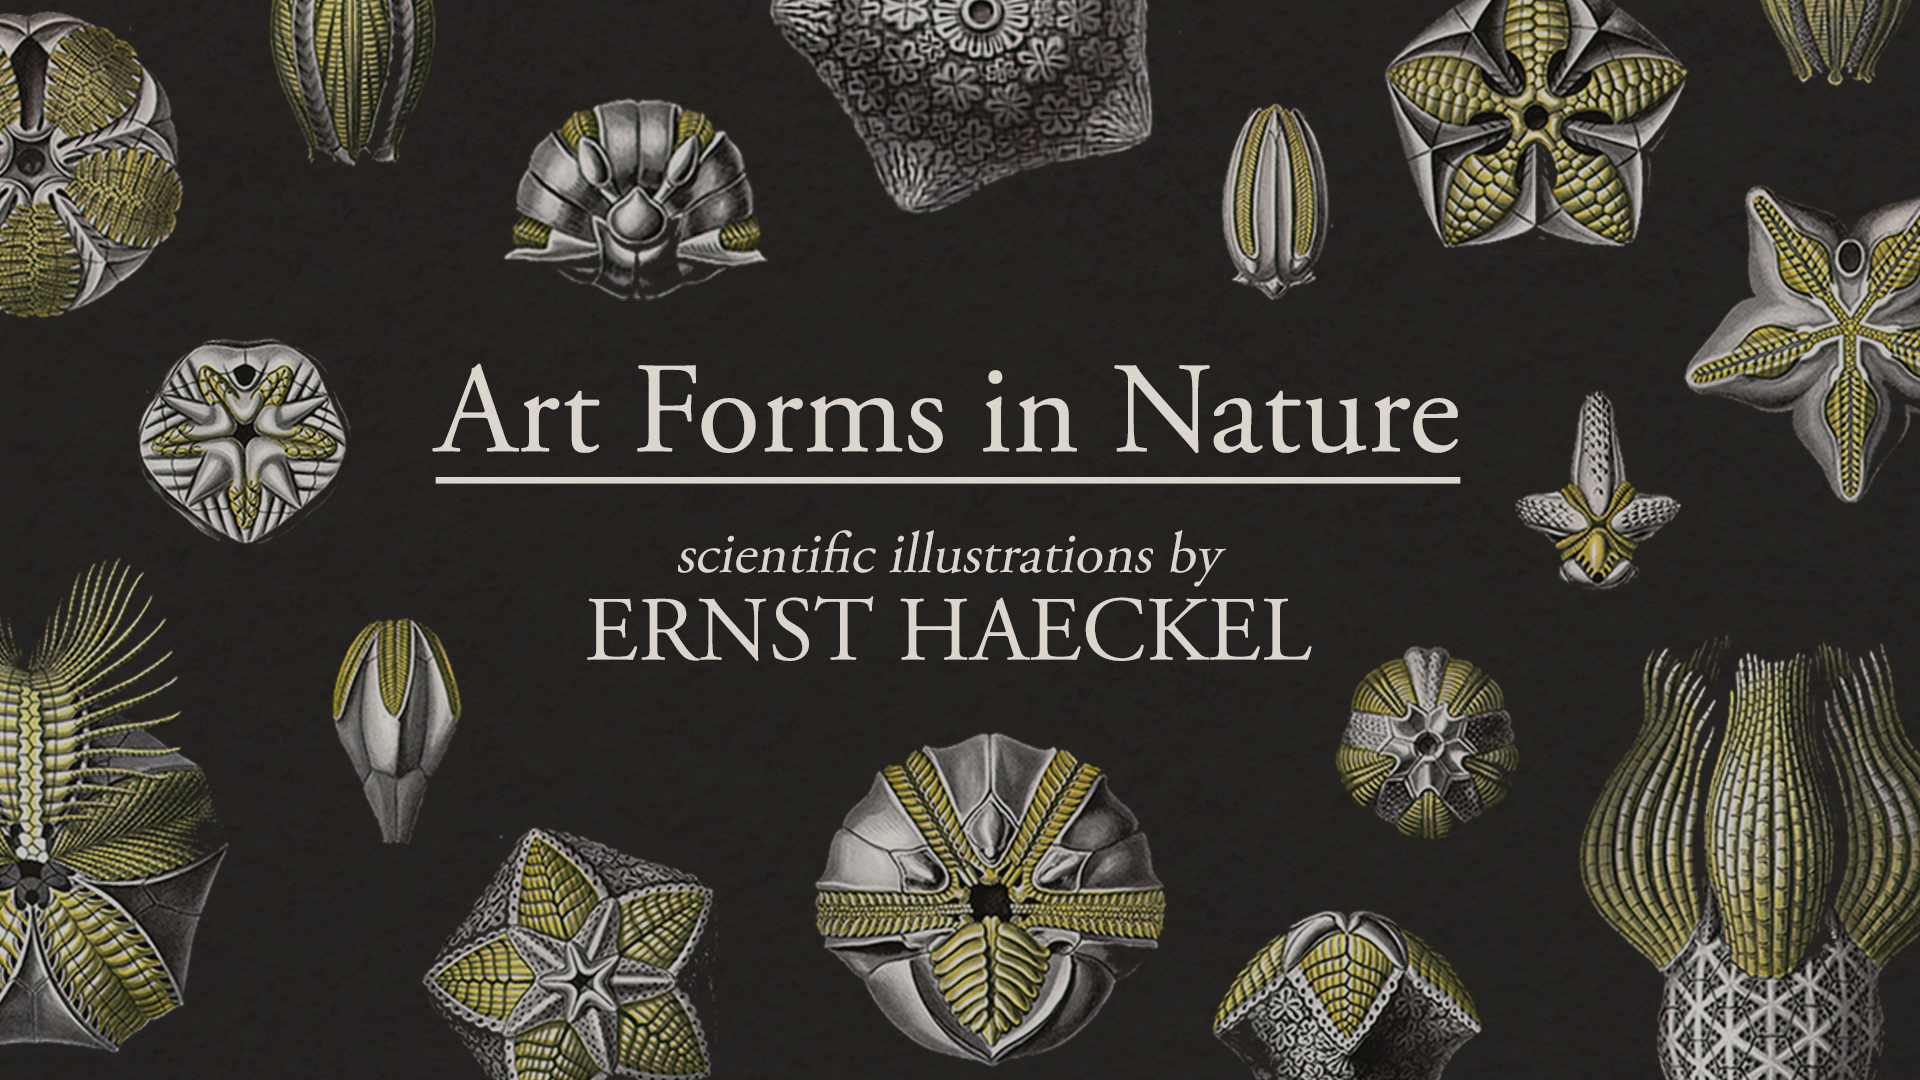 Ernst Haeckel Art Forms In Nature Screenarts